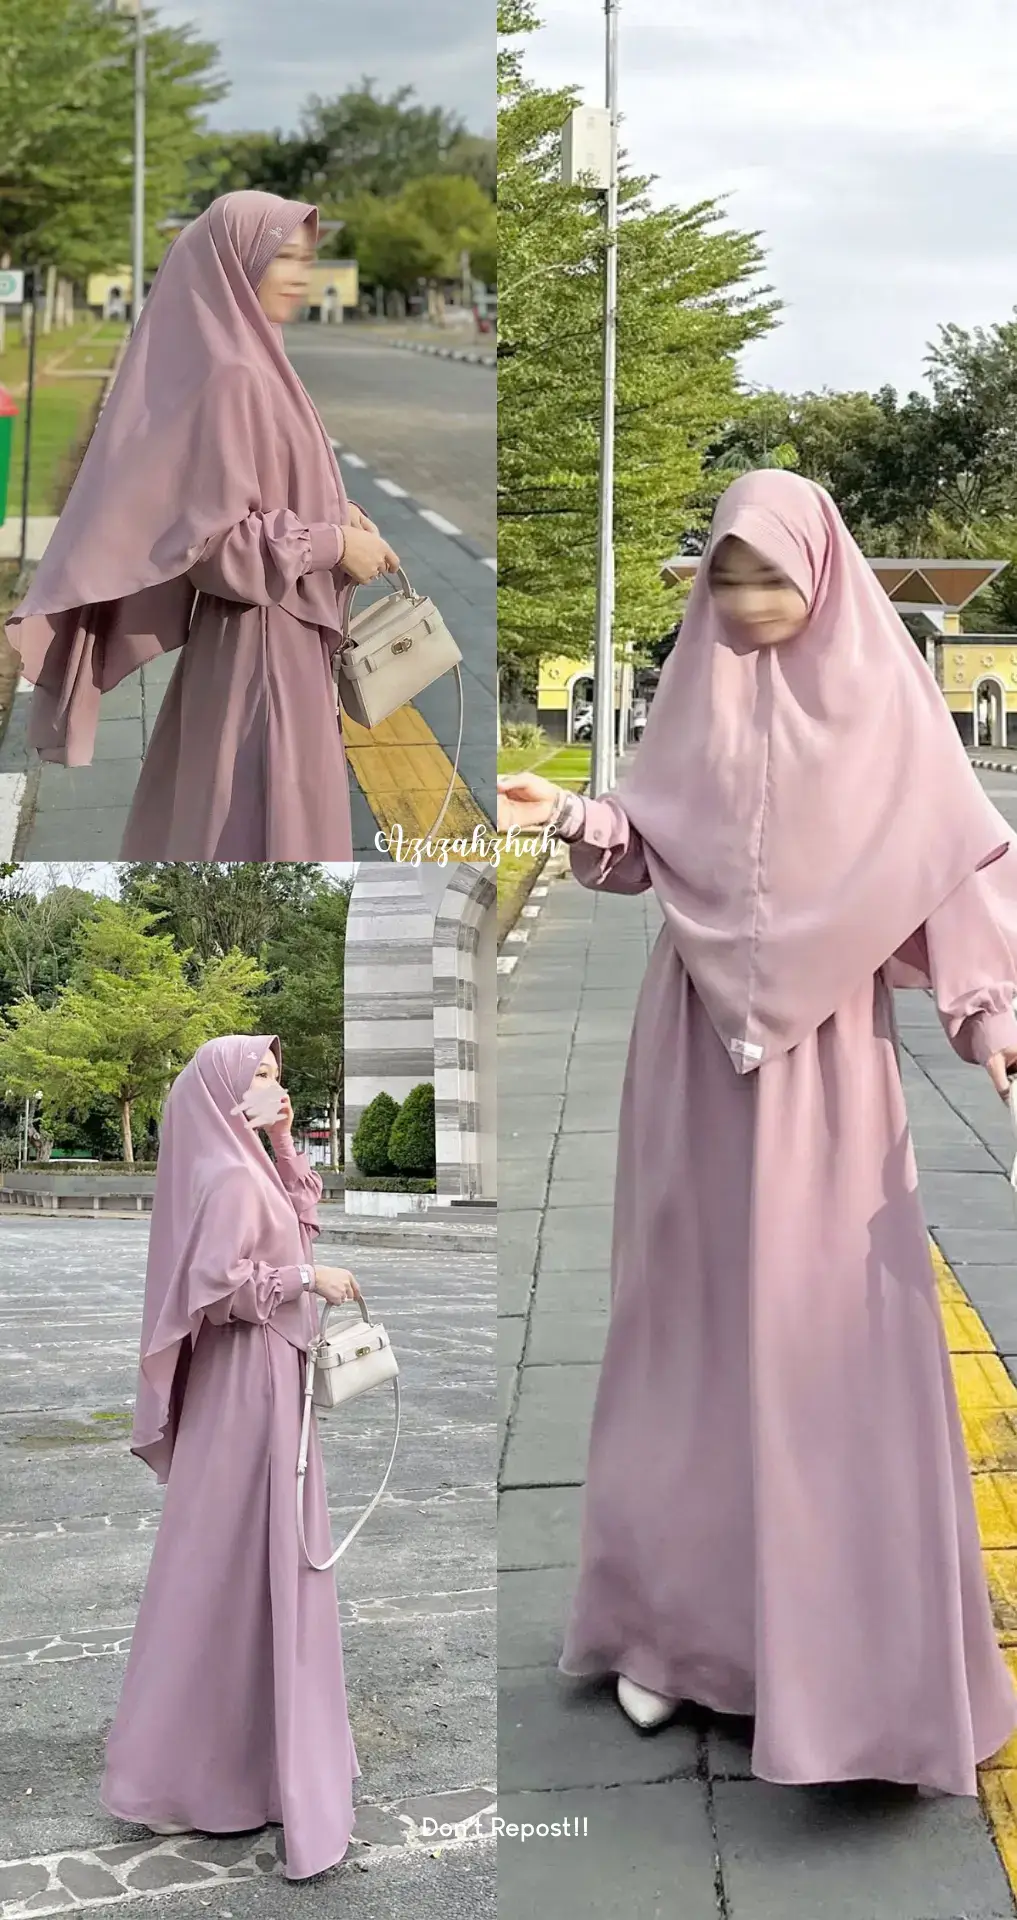 Ide OOTD Outfit Muslimah ❣ Simple Syar'i dan tetap Stylish #masyaallahtabarakkallah #OOTD  #inspirasi #outfit by @windyerlisa